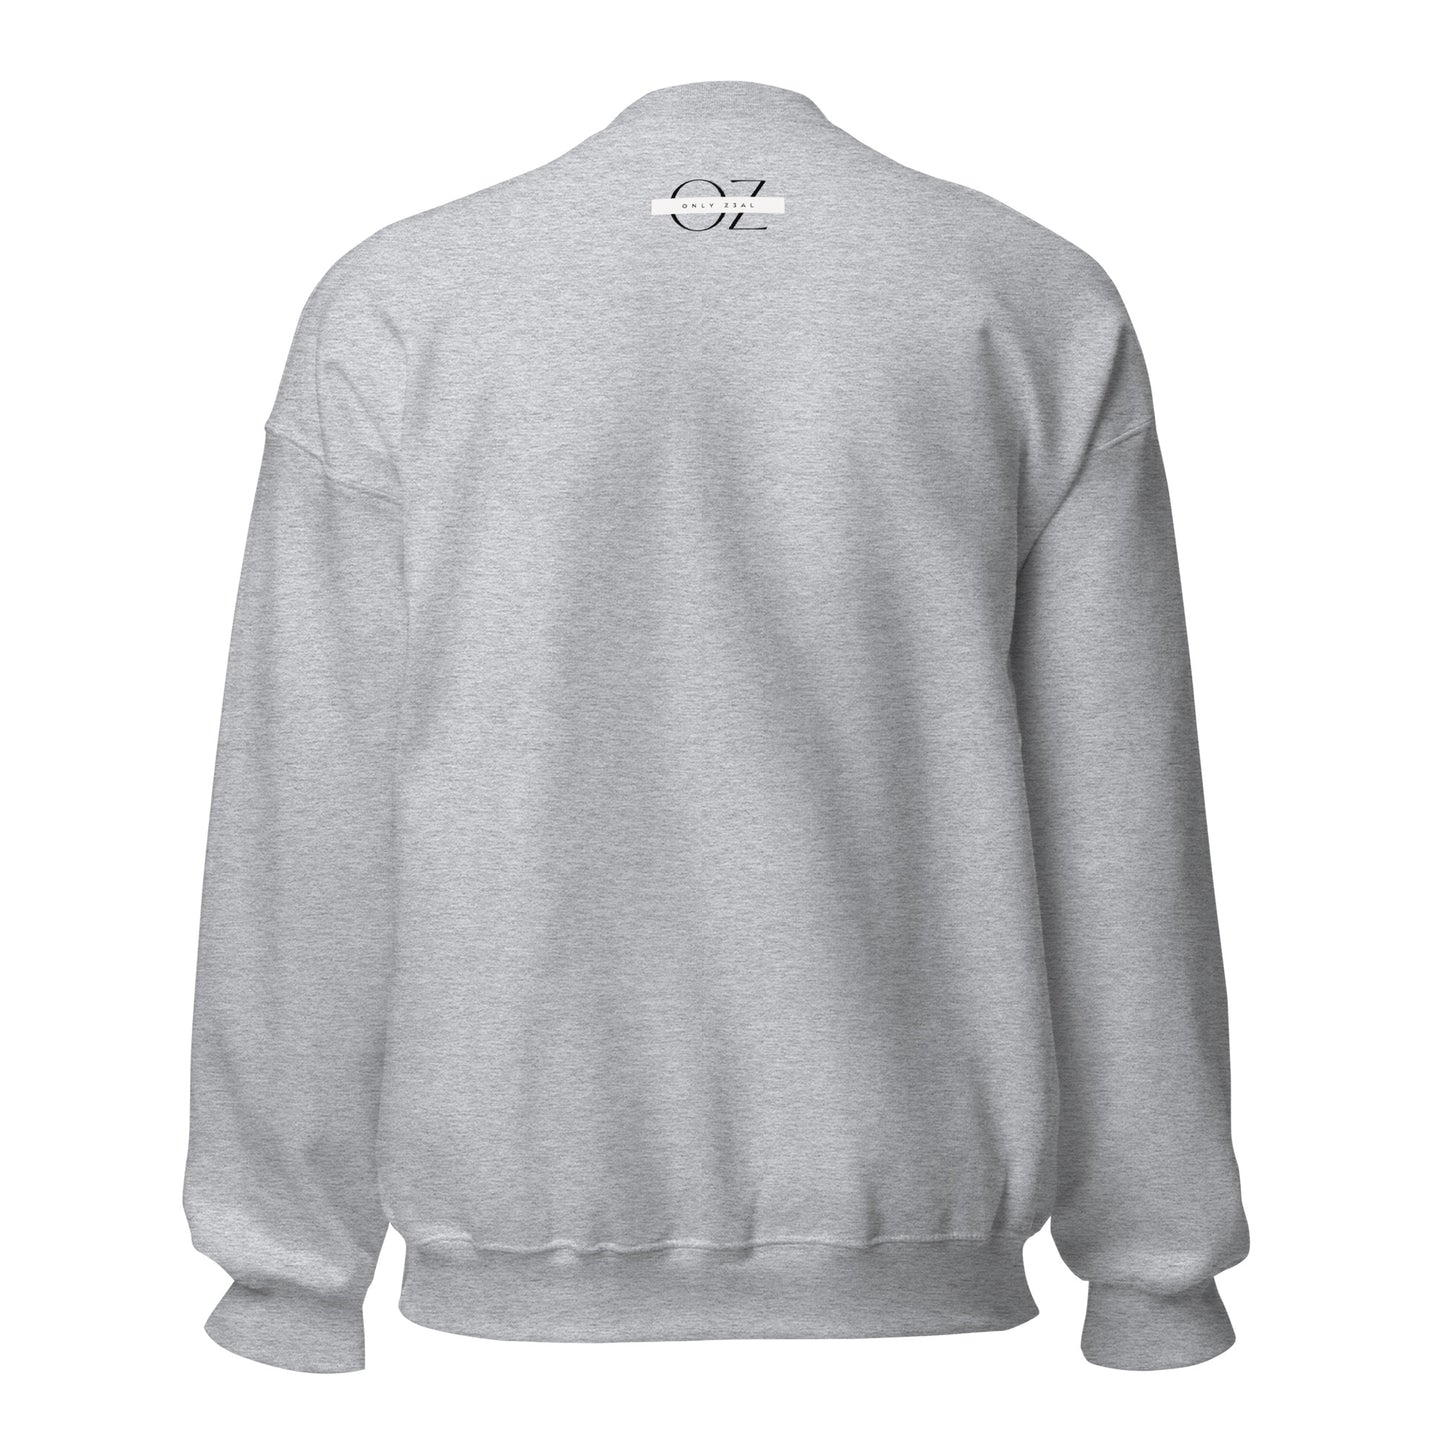 Premium Cozy Wear Classic Fit Grey Sweatshirt |ONLYZ3AL